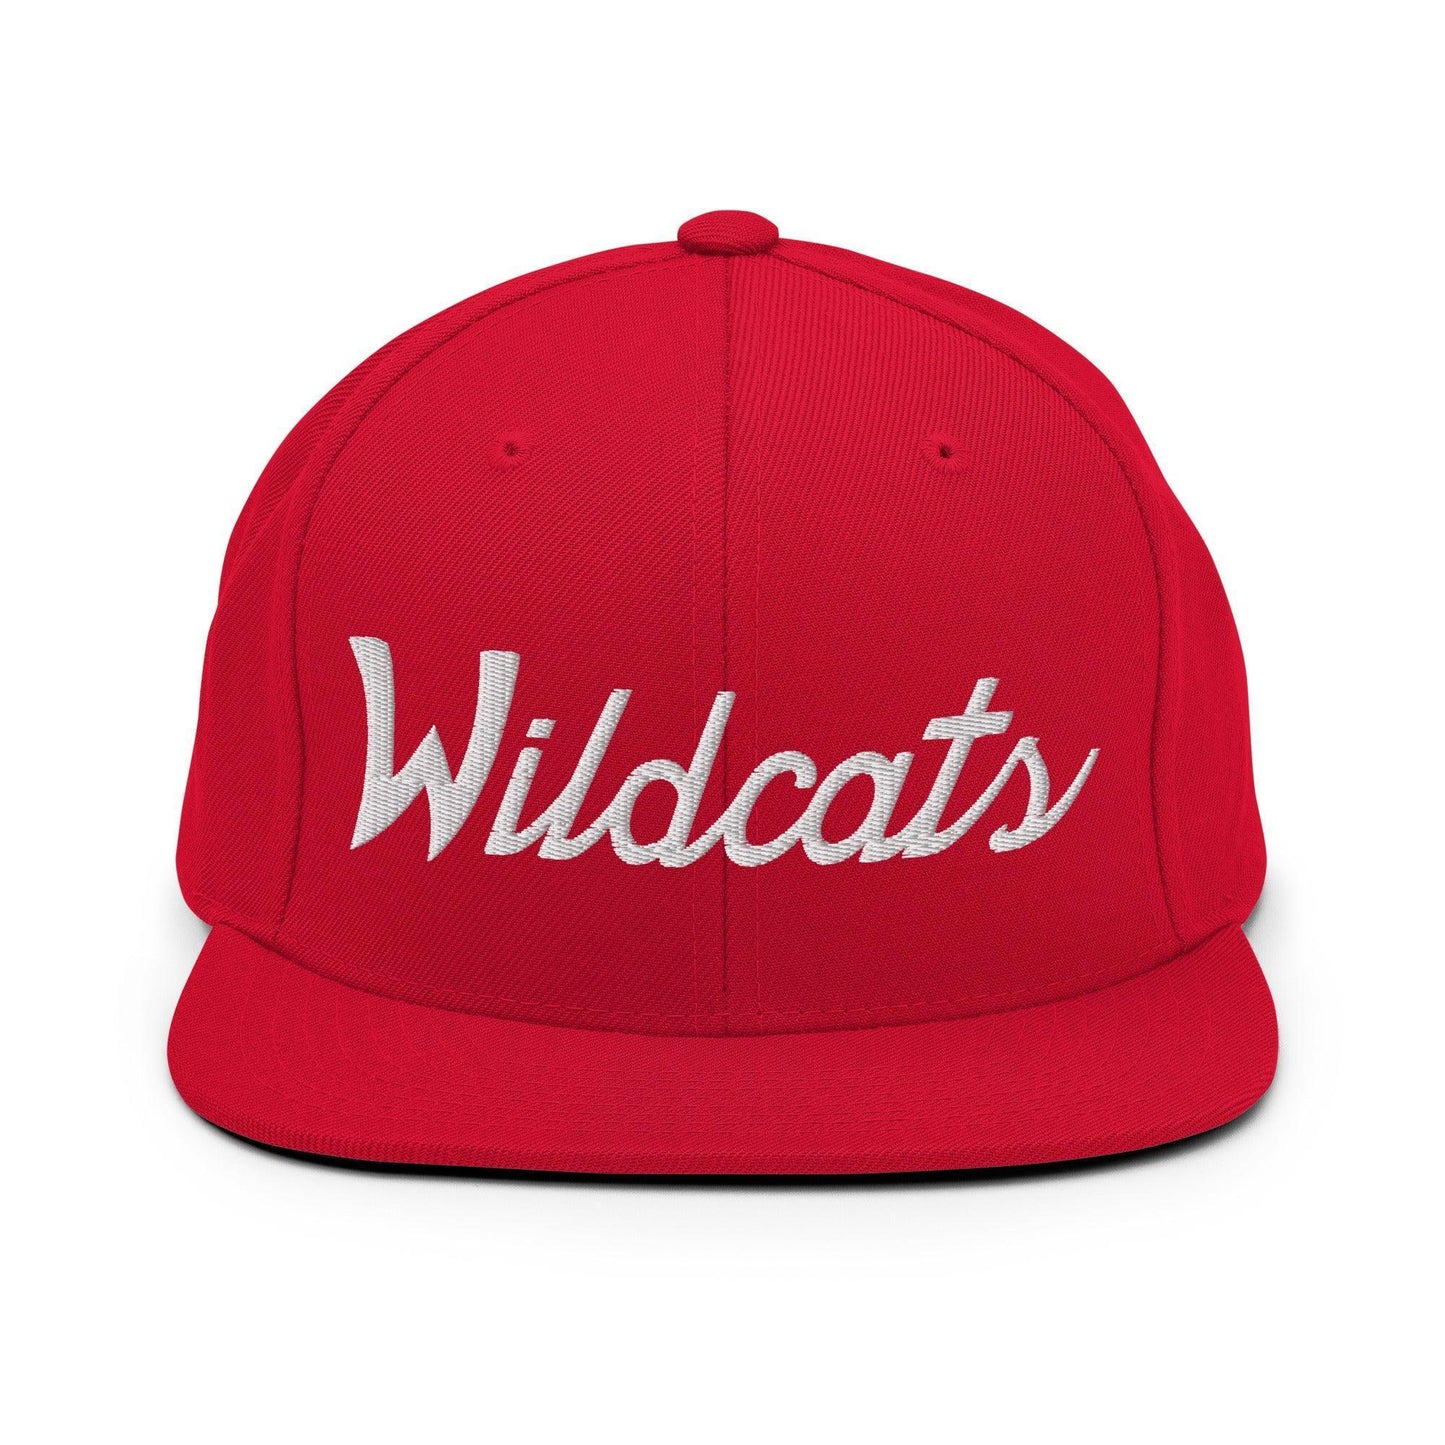 Wildcats School Mascot Script Snapback Hat Red